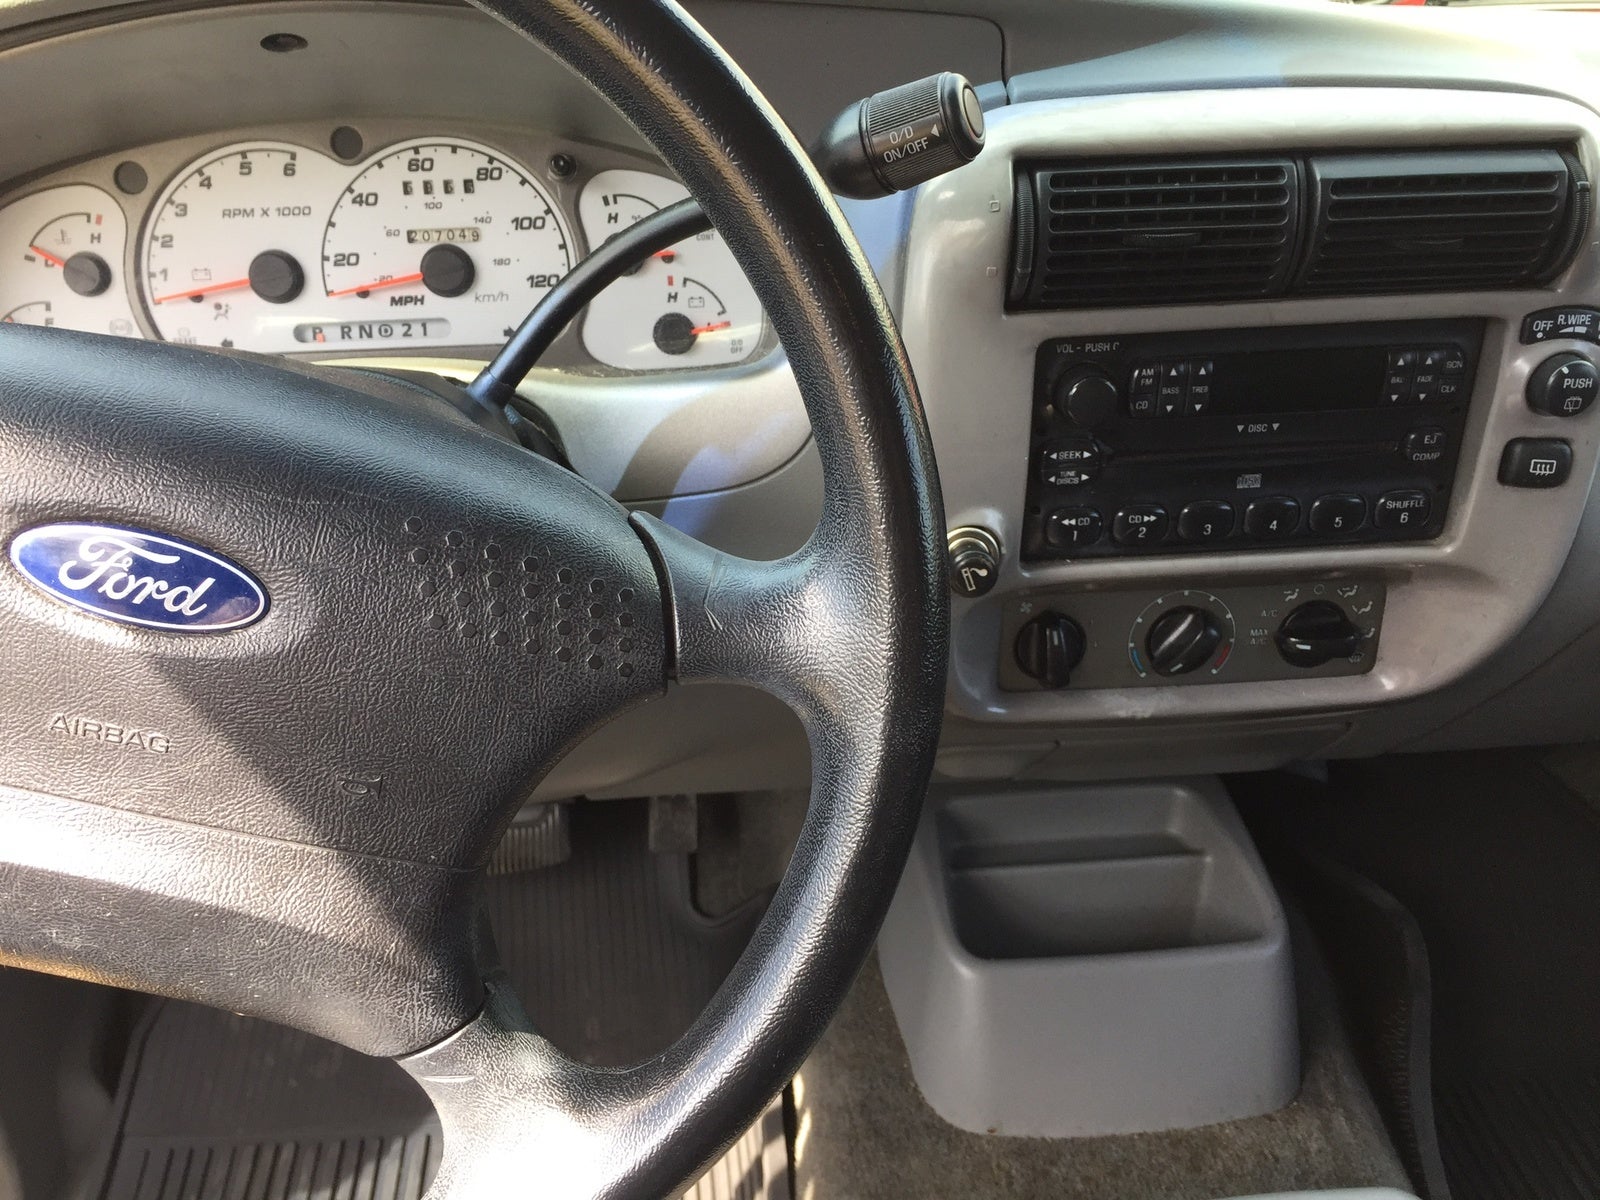 2002 Ford Explorer Inside Wiring Diagram Load